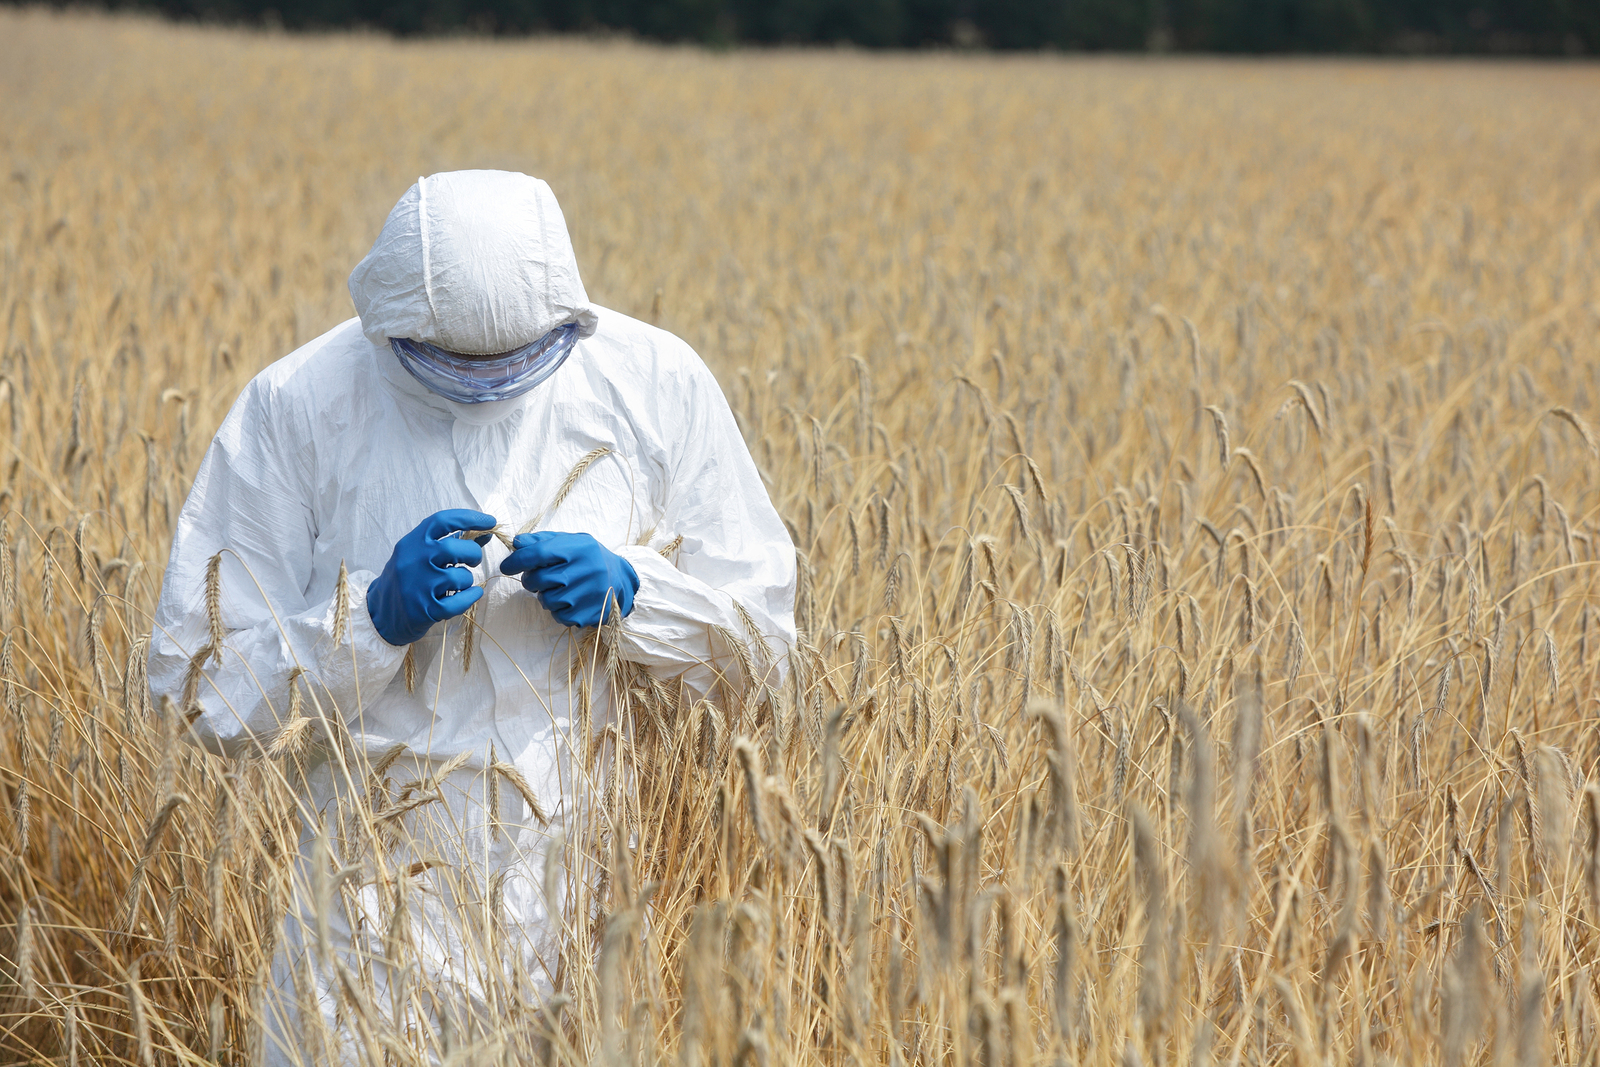 Biotechnology Engineer On Field Examining Ripe Ears Of Grain